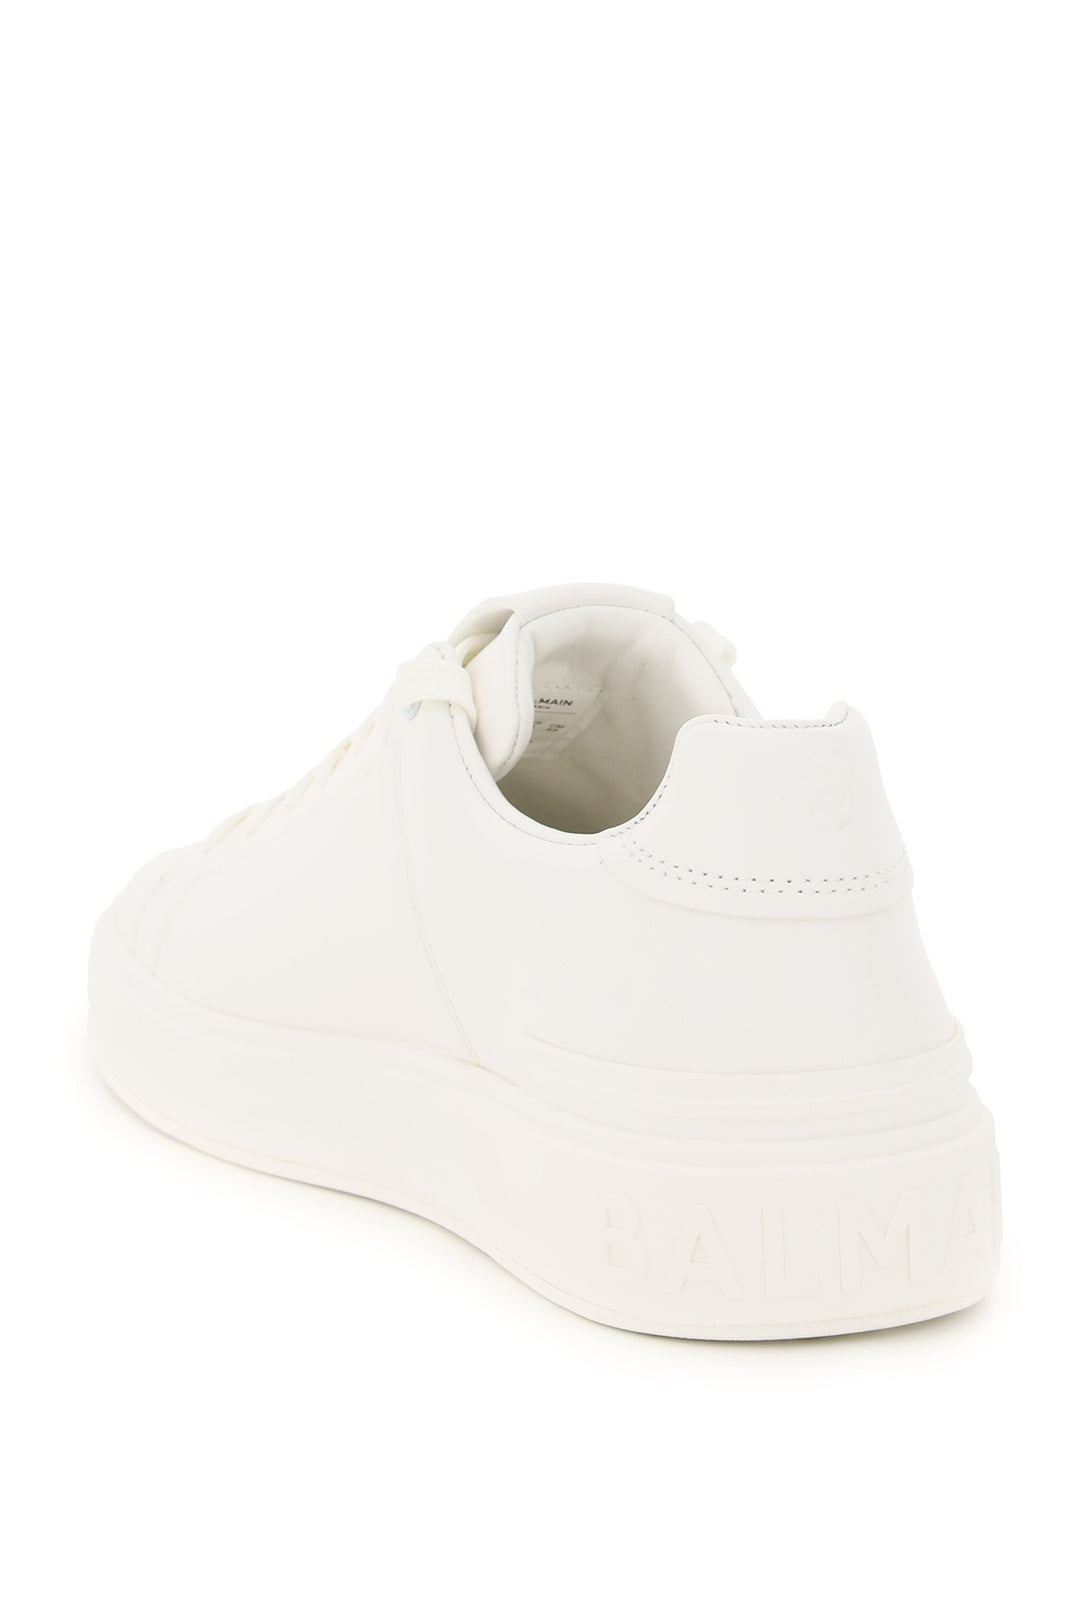 Balmain B Court Sneakers   White